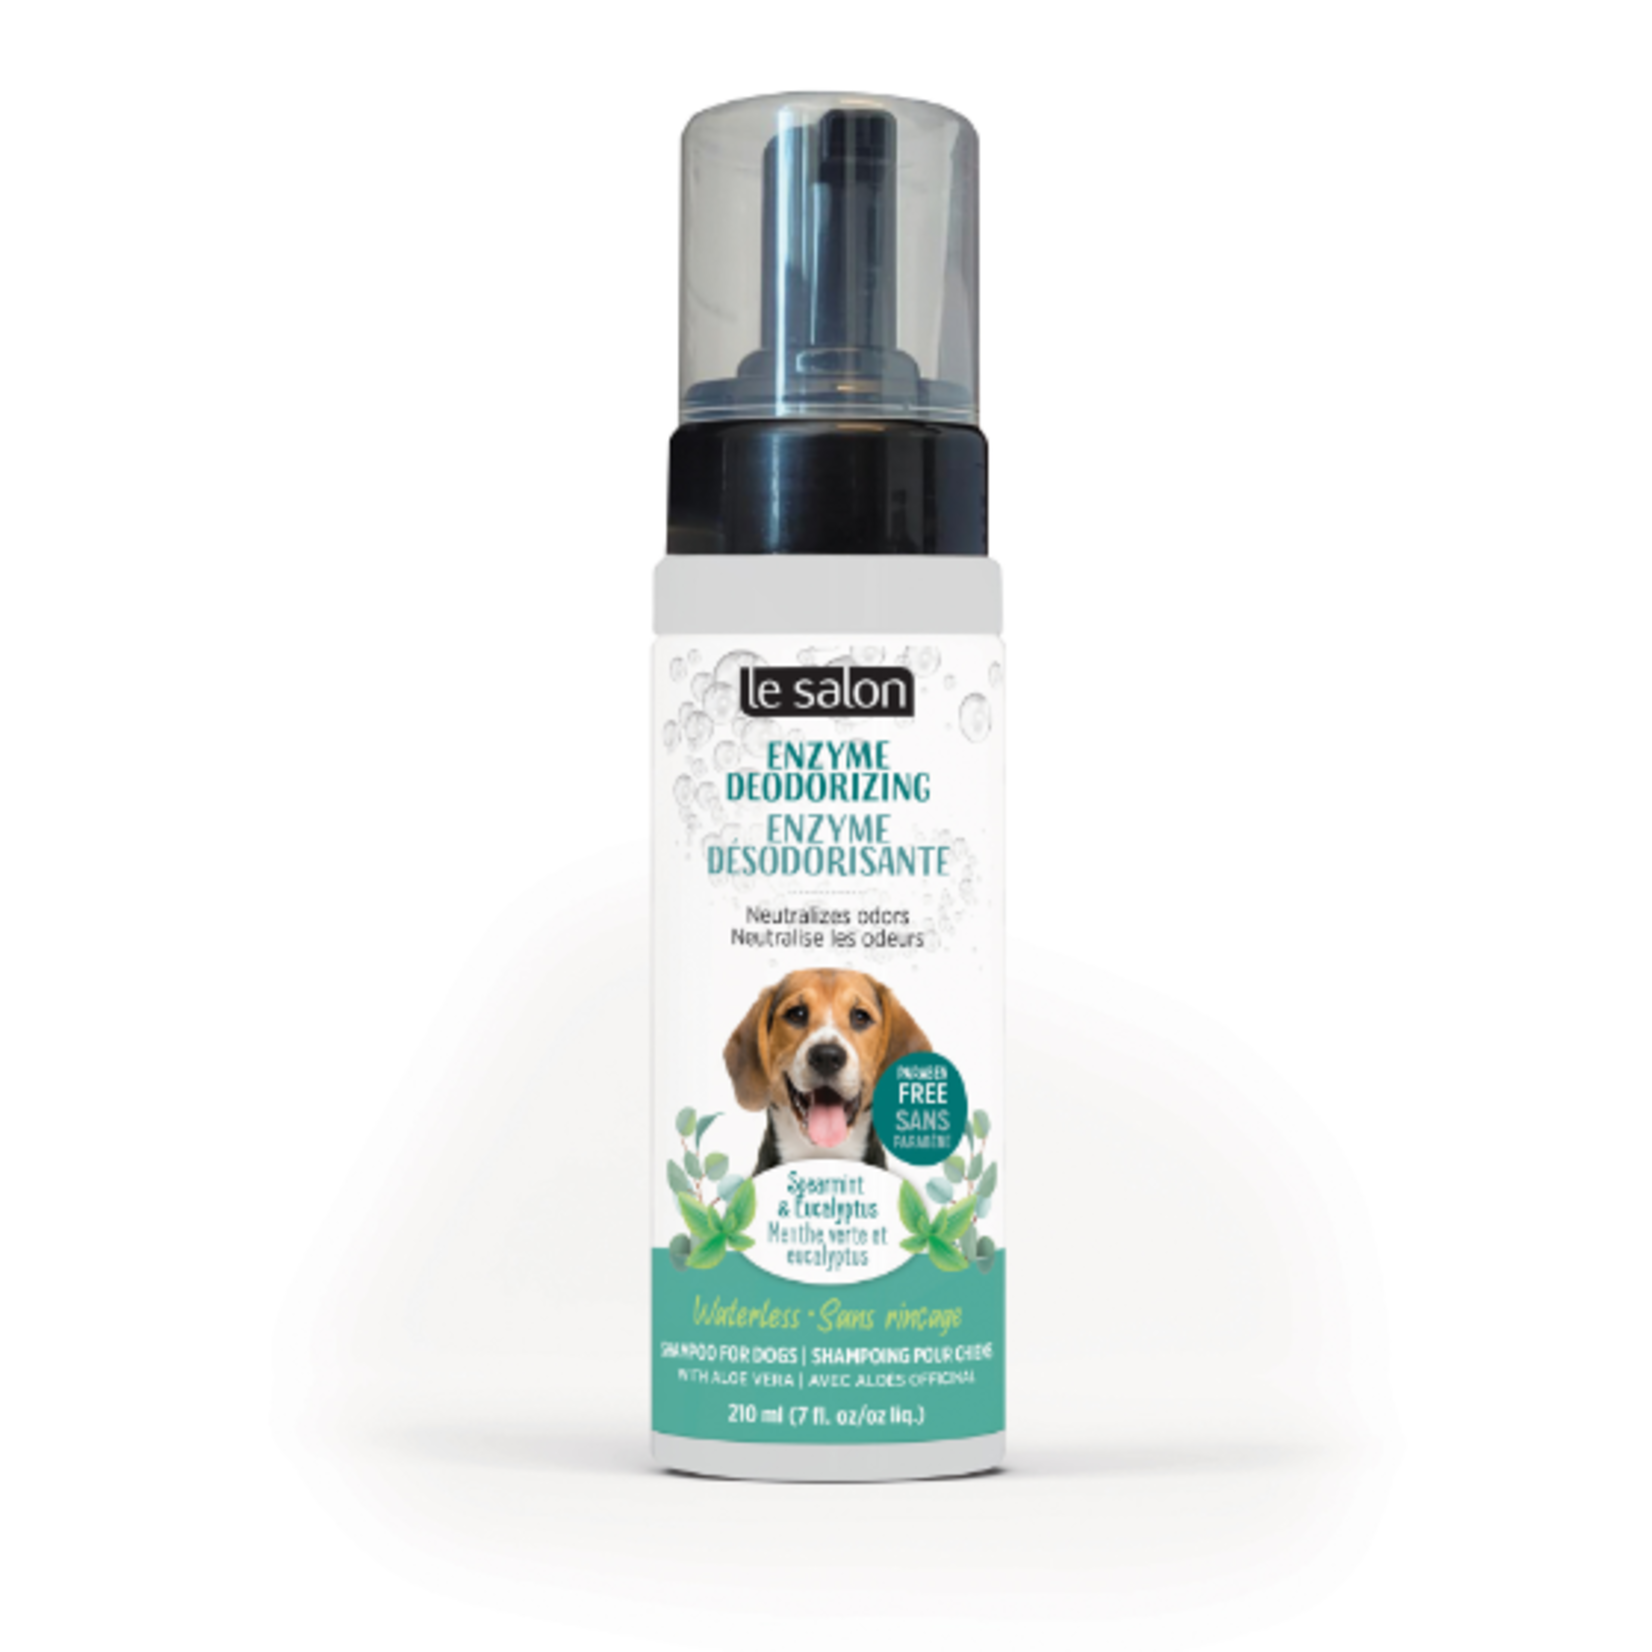 Le Salon Enzyme Deodorizing - Waterless Shampoo for Dogs - 210 ml